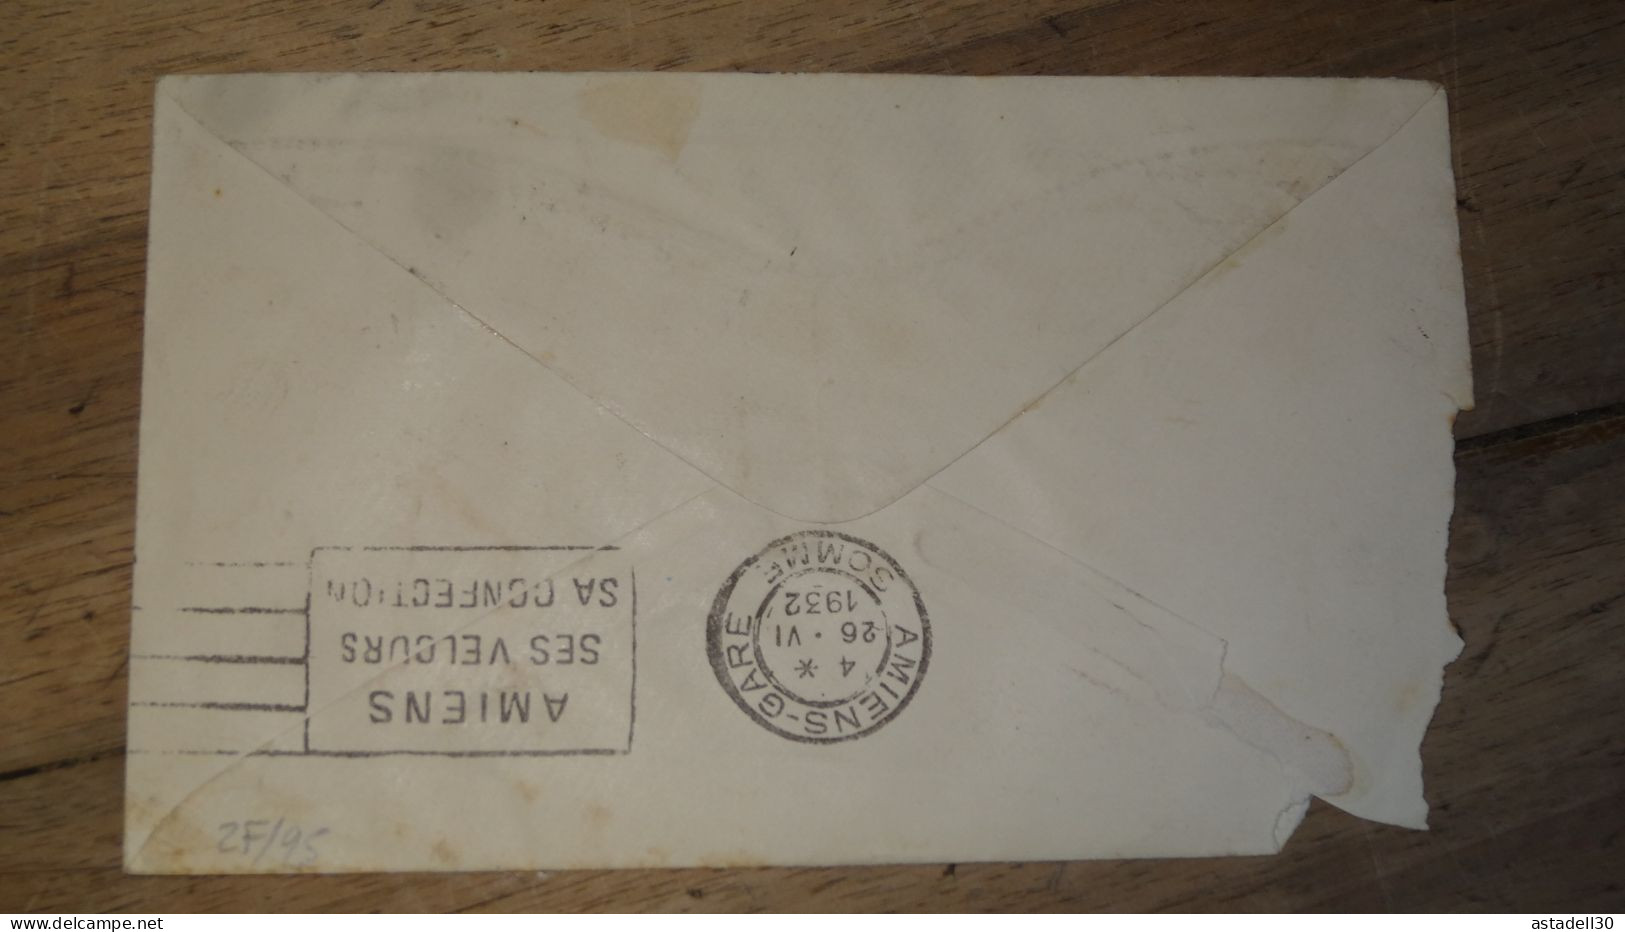 Enveloppe INDIA, SADASHIV PERTH 1932   ......... Boite1 ...... 240424-57 - 1911-35 King George V